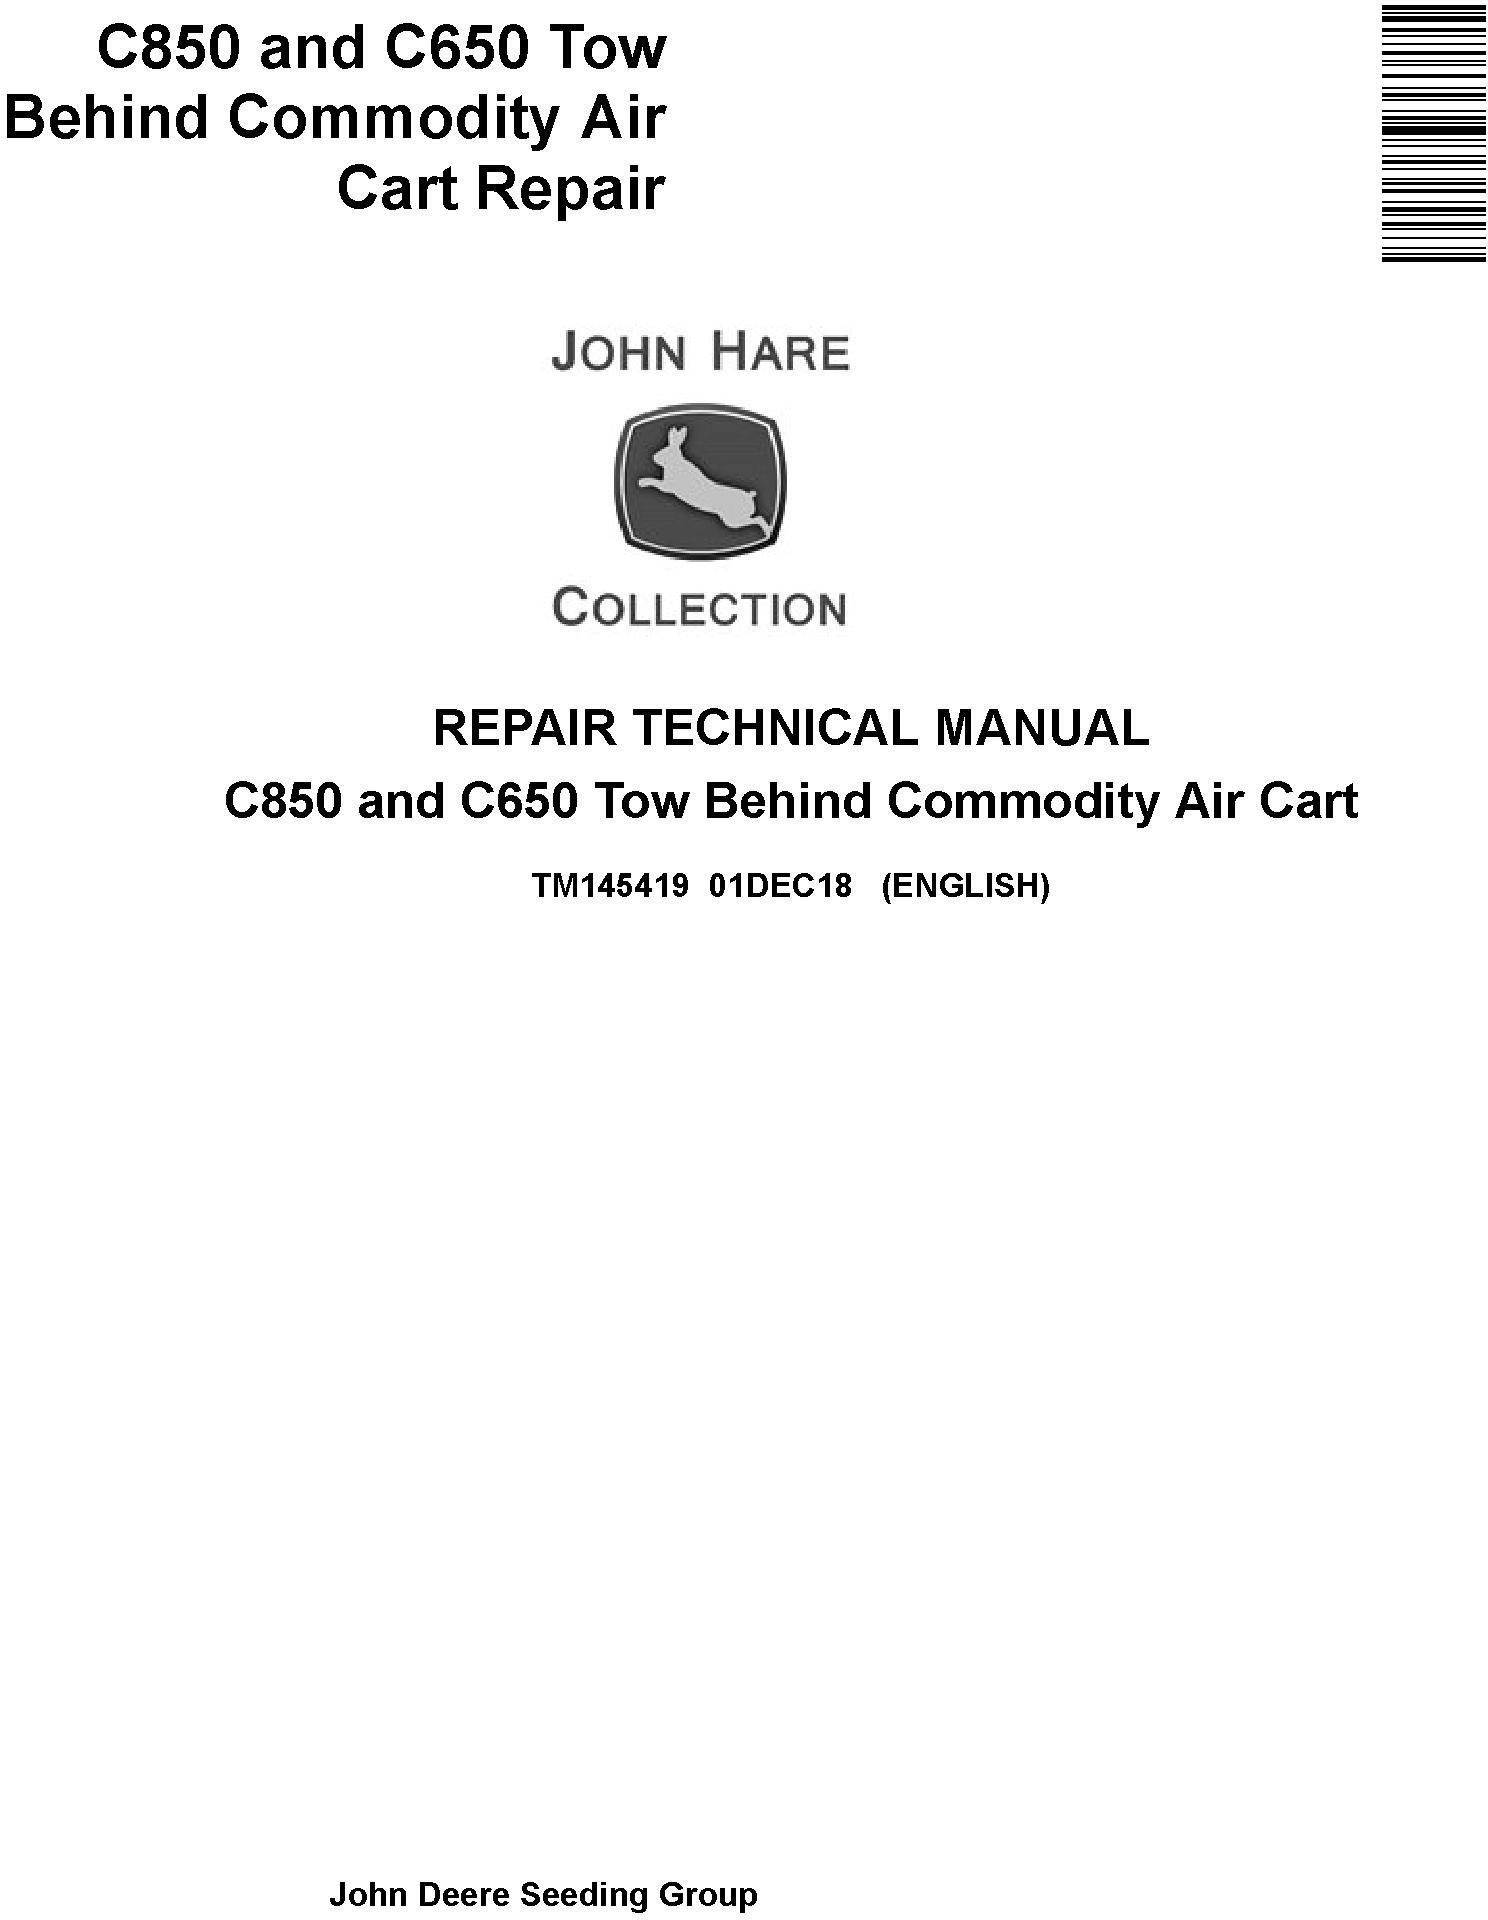 John Deere C850 and C650 Tow Behind Commodity Air Cart Repair Technical Service Manual (TM145419) - 19276